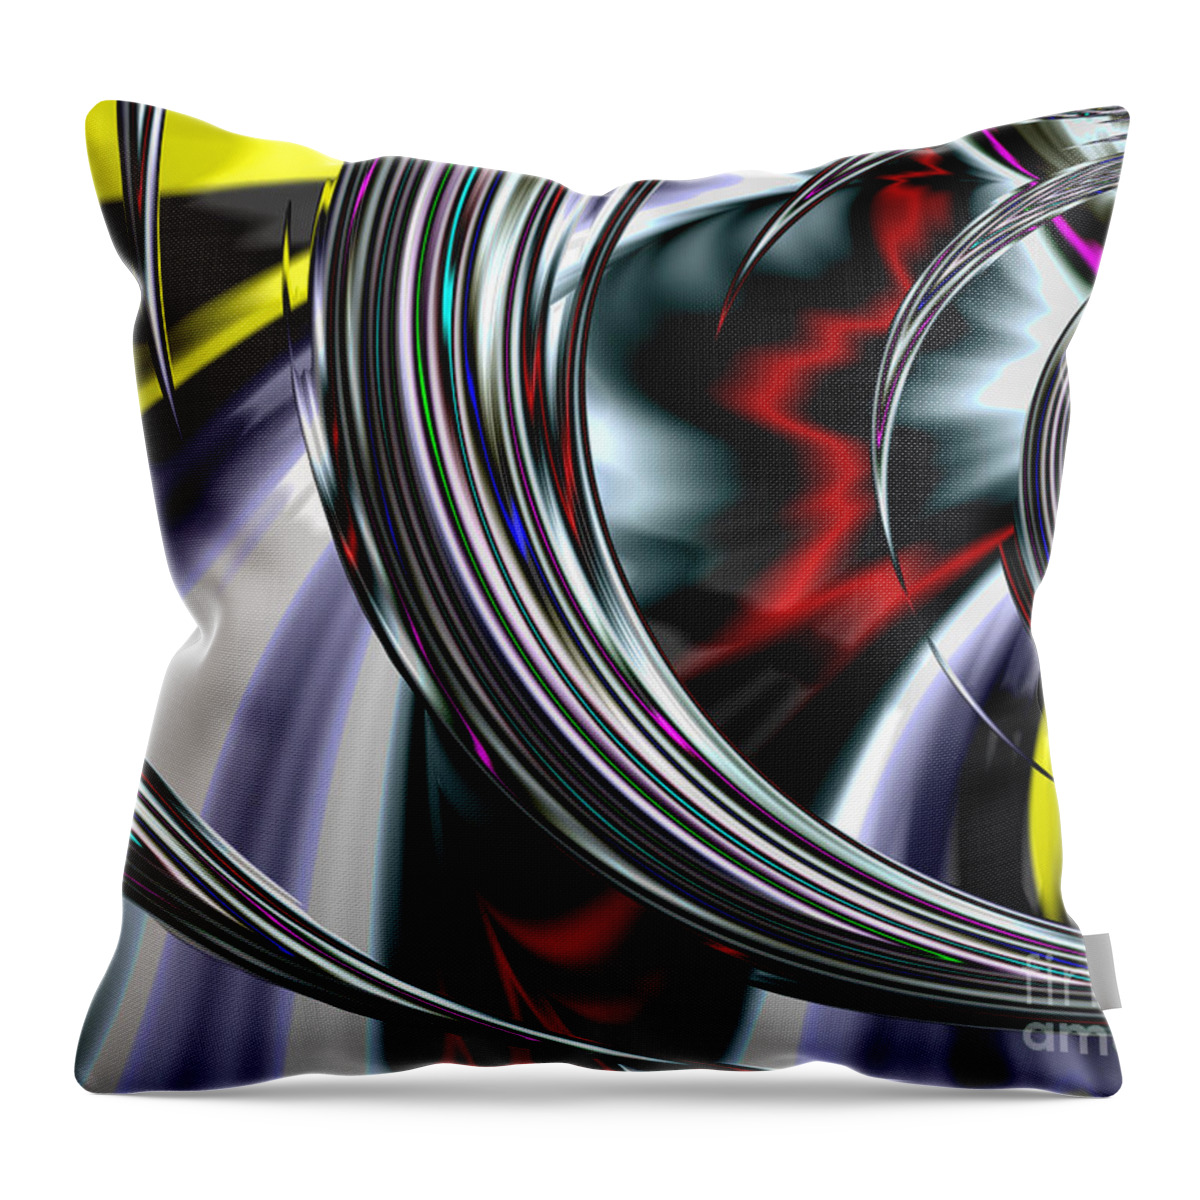 Art Throw Pillow featuring the digital art Through the glass by Vix Edwards